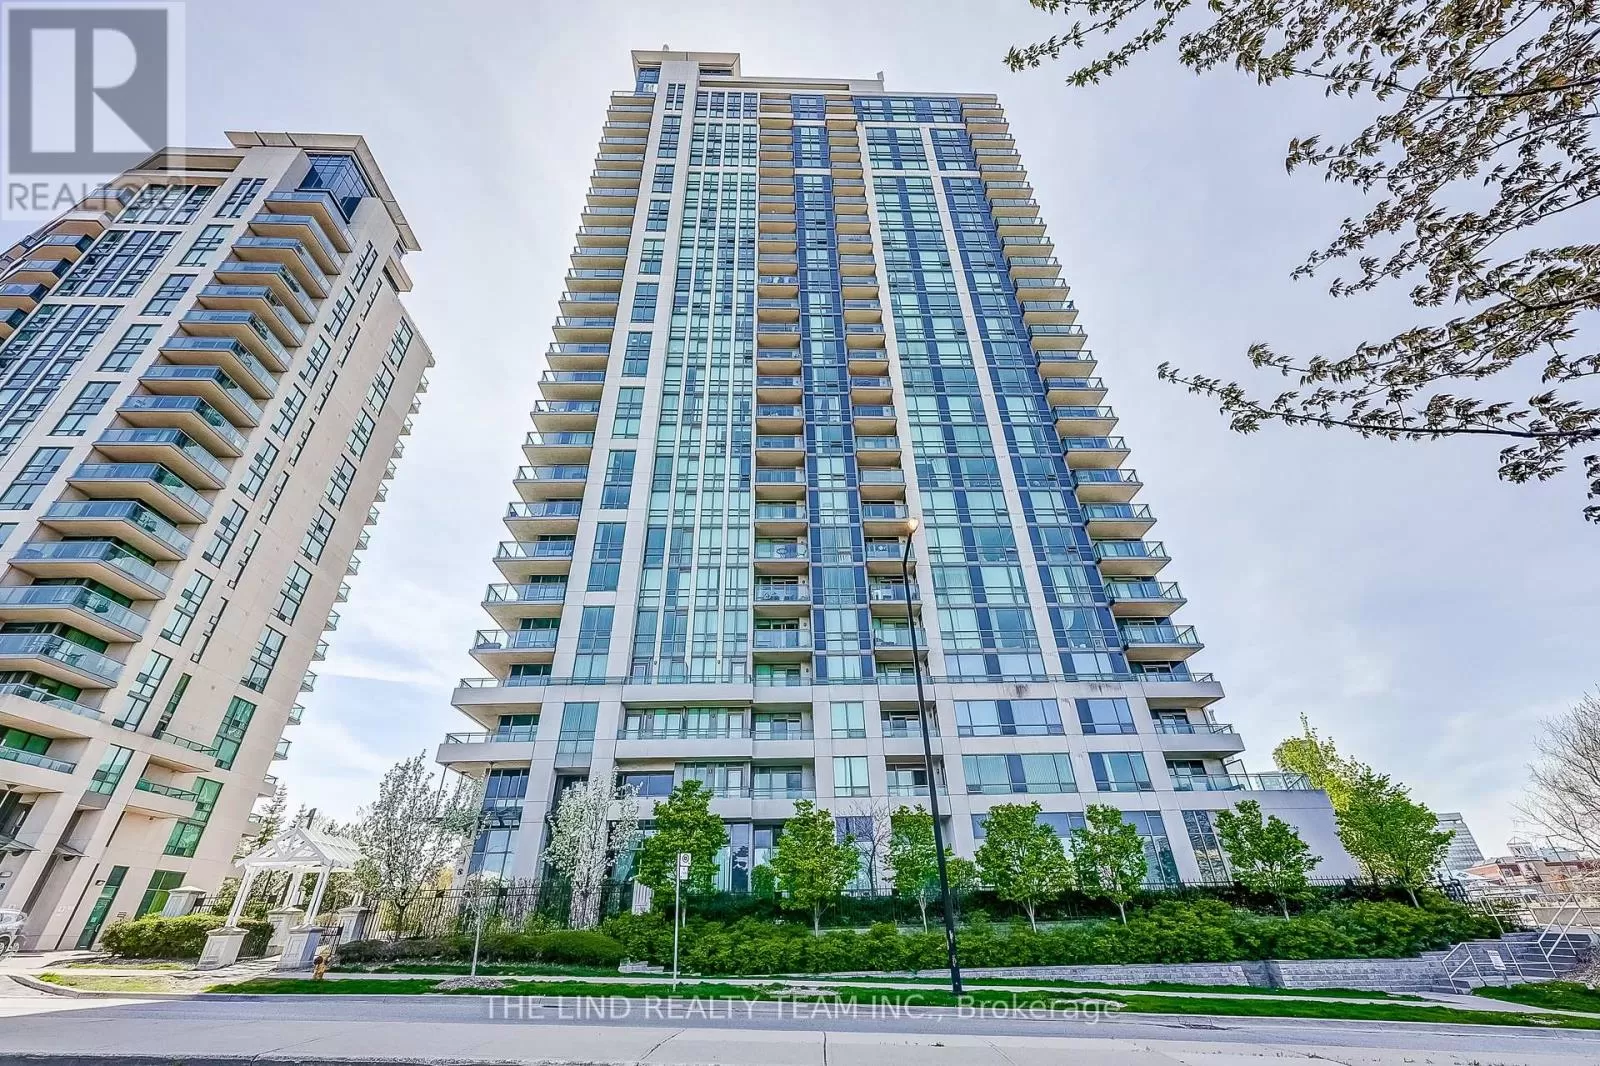 Apartment for rent: 2510 - 88 Grangeway Avenue, Toronto, Ontario M1H 0A2